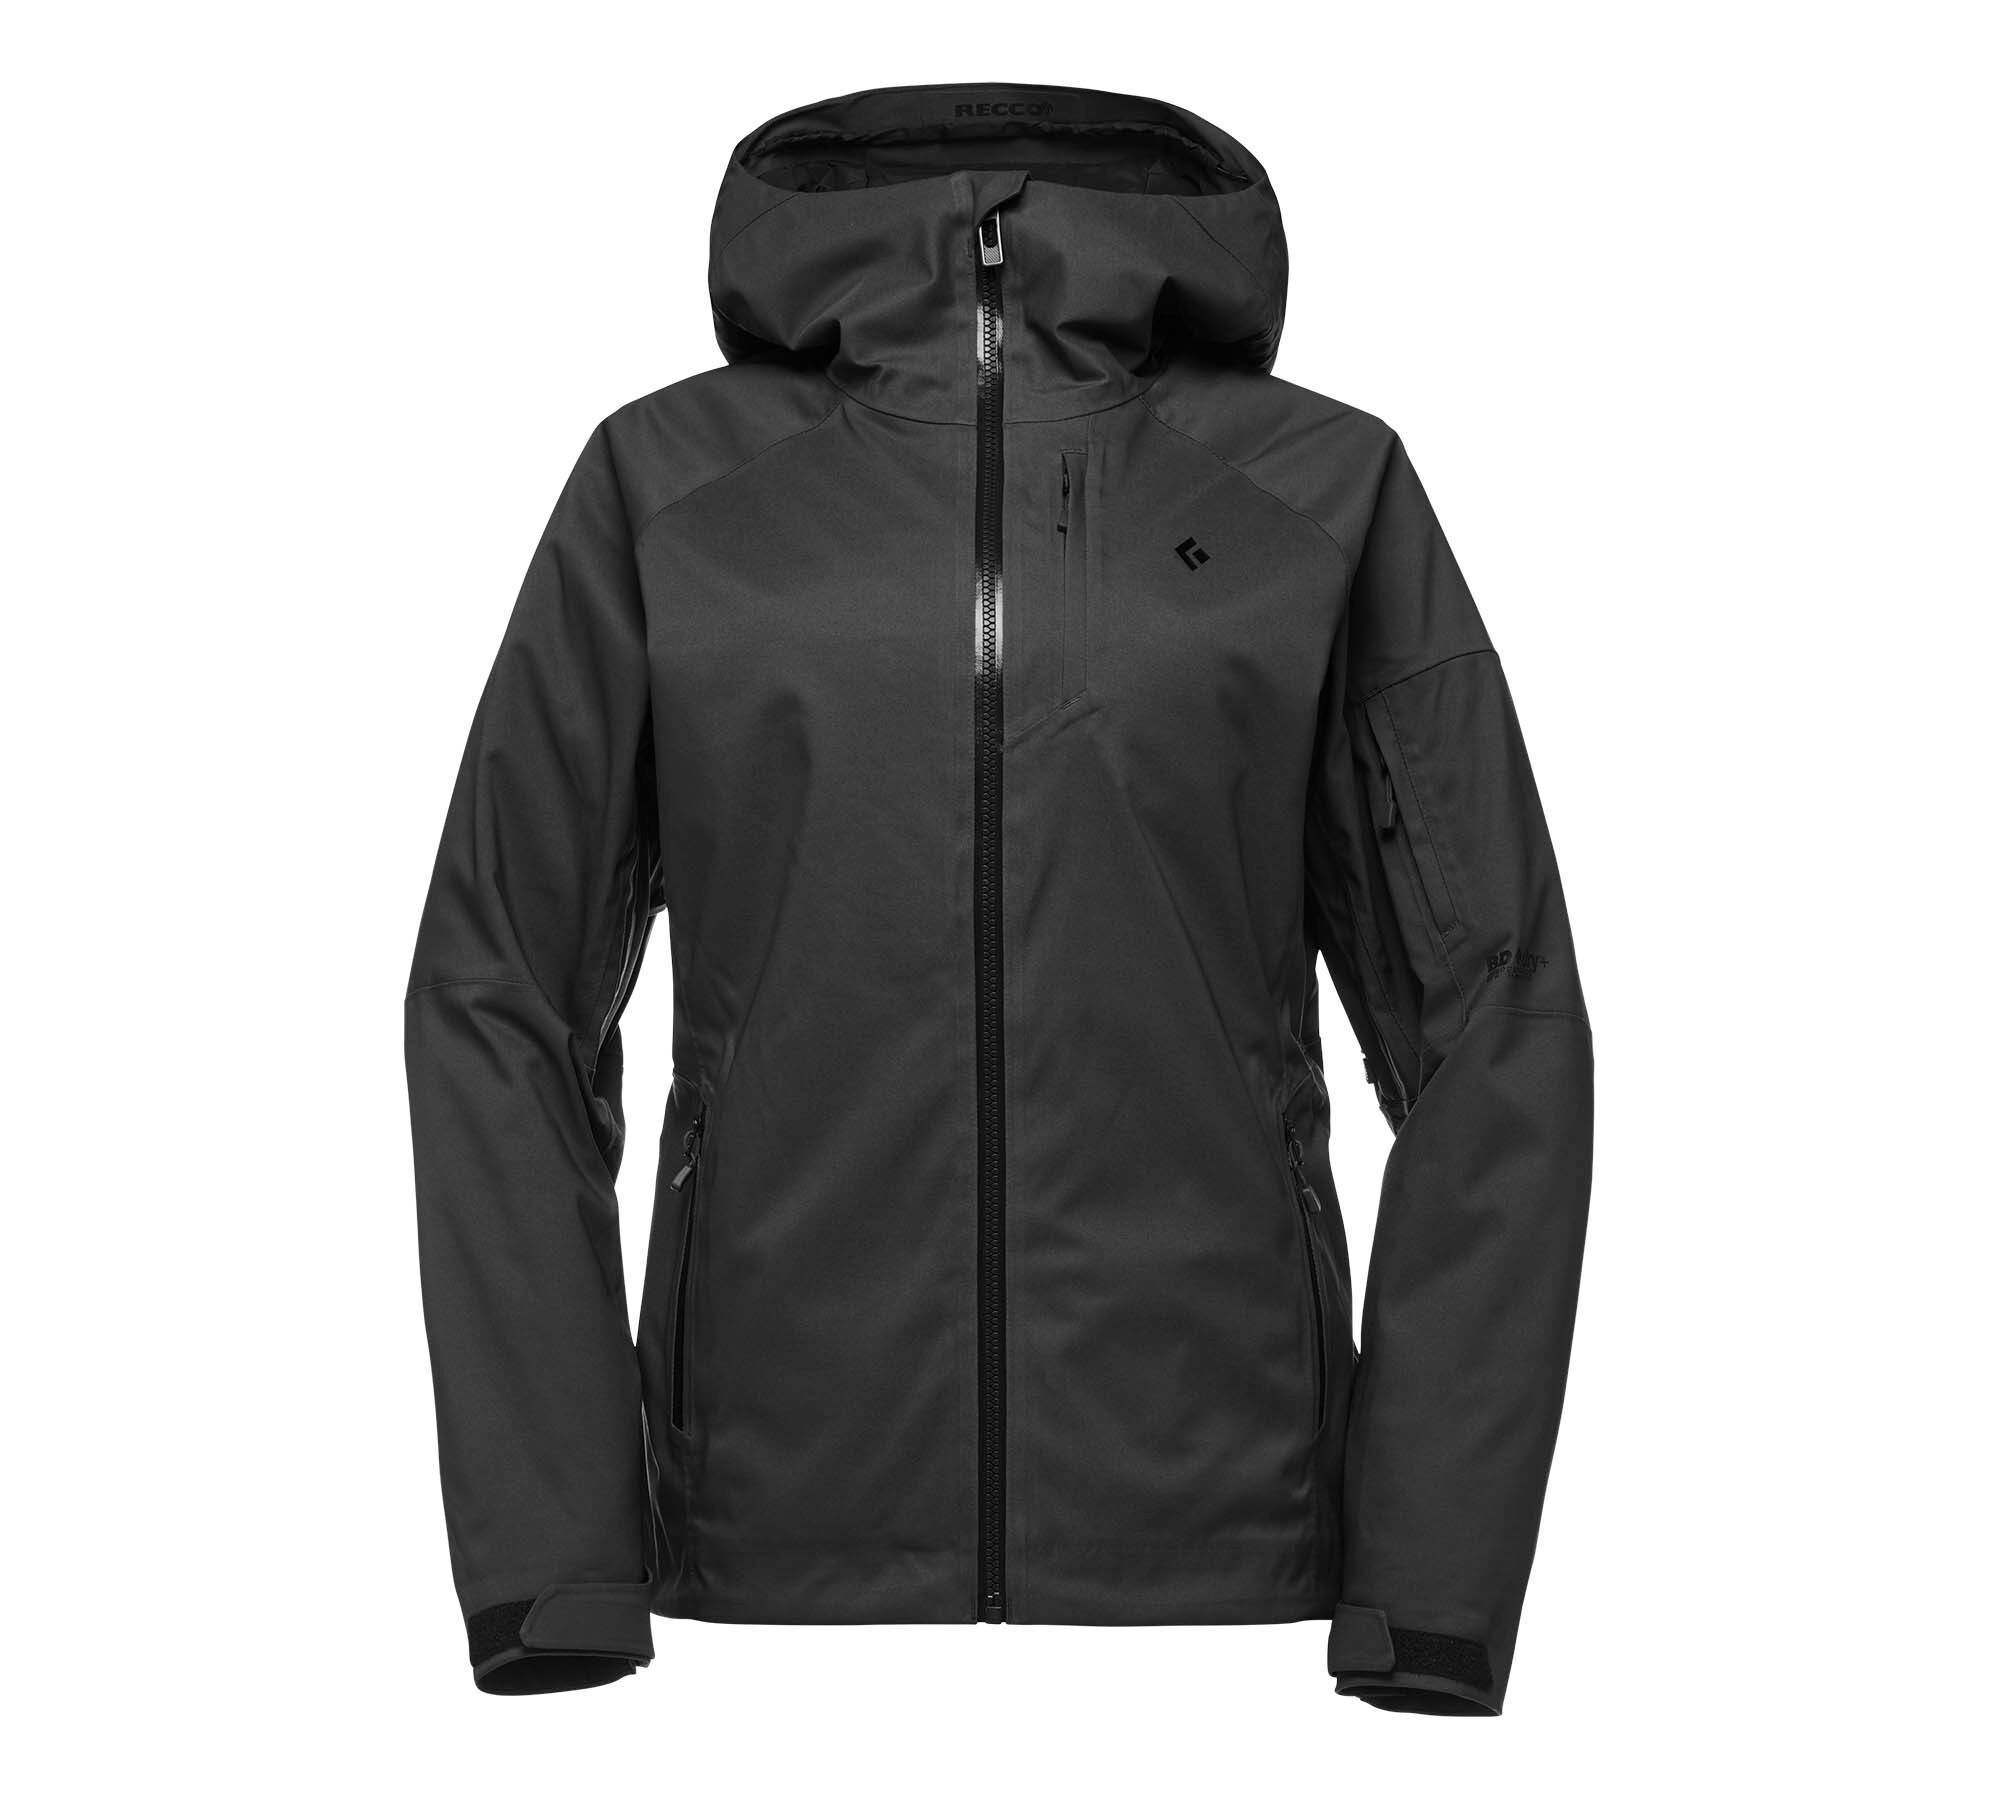 Black Diamond Boundary Line Insulated Jacket - Ski jacket - Women's